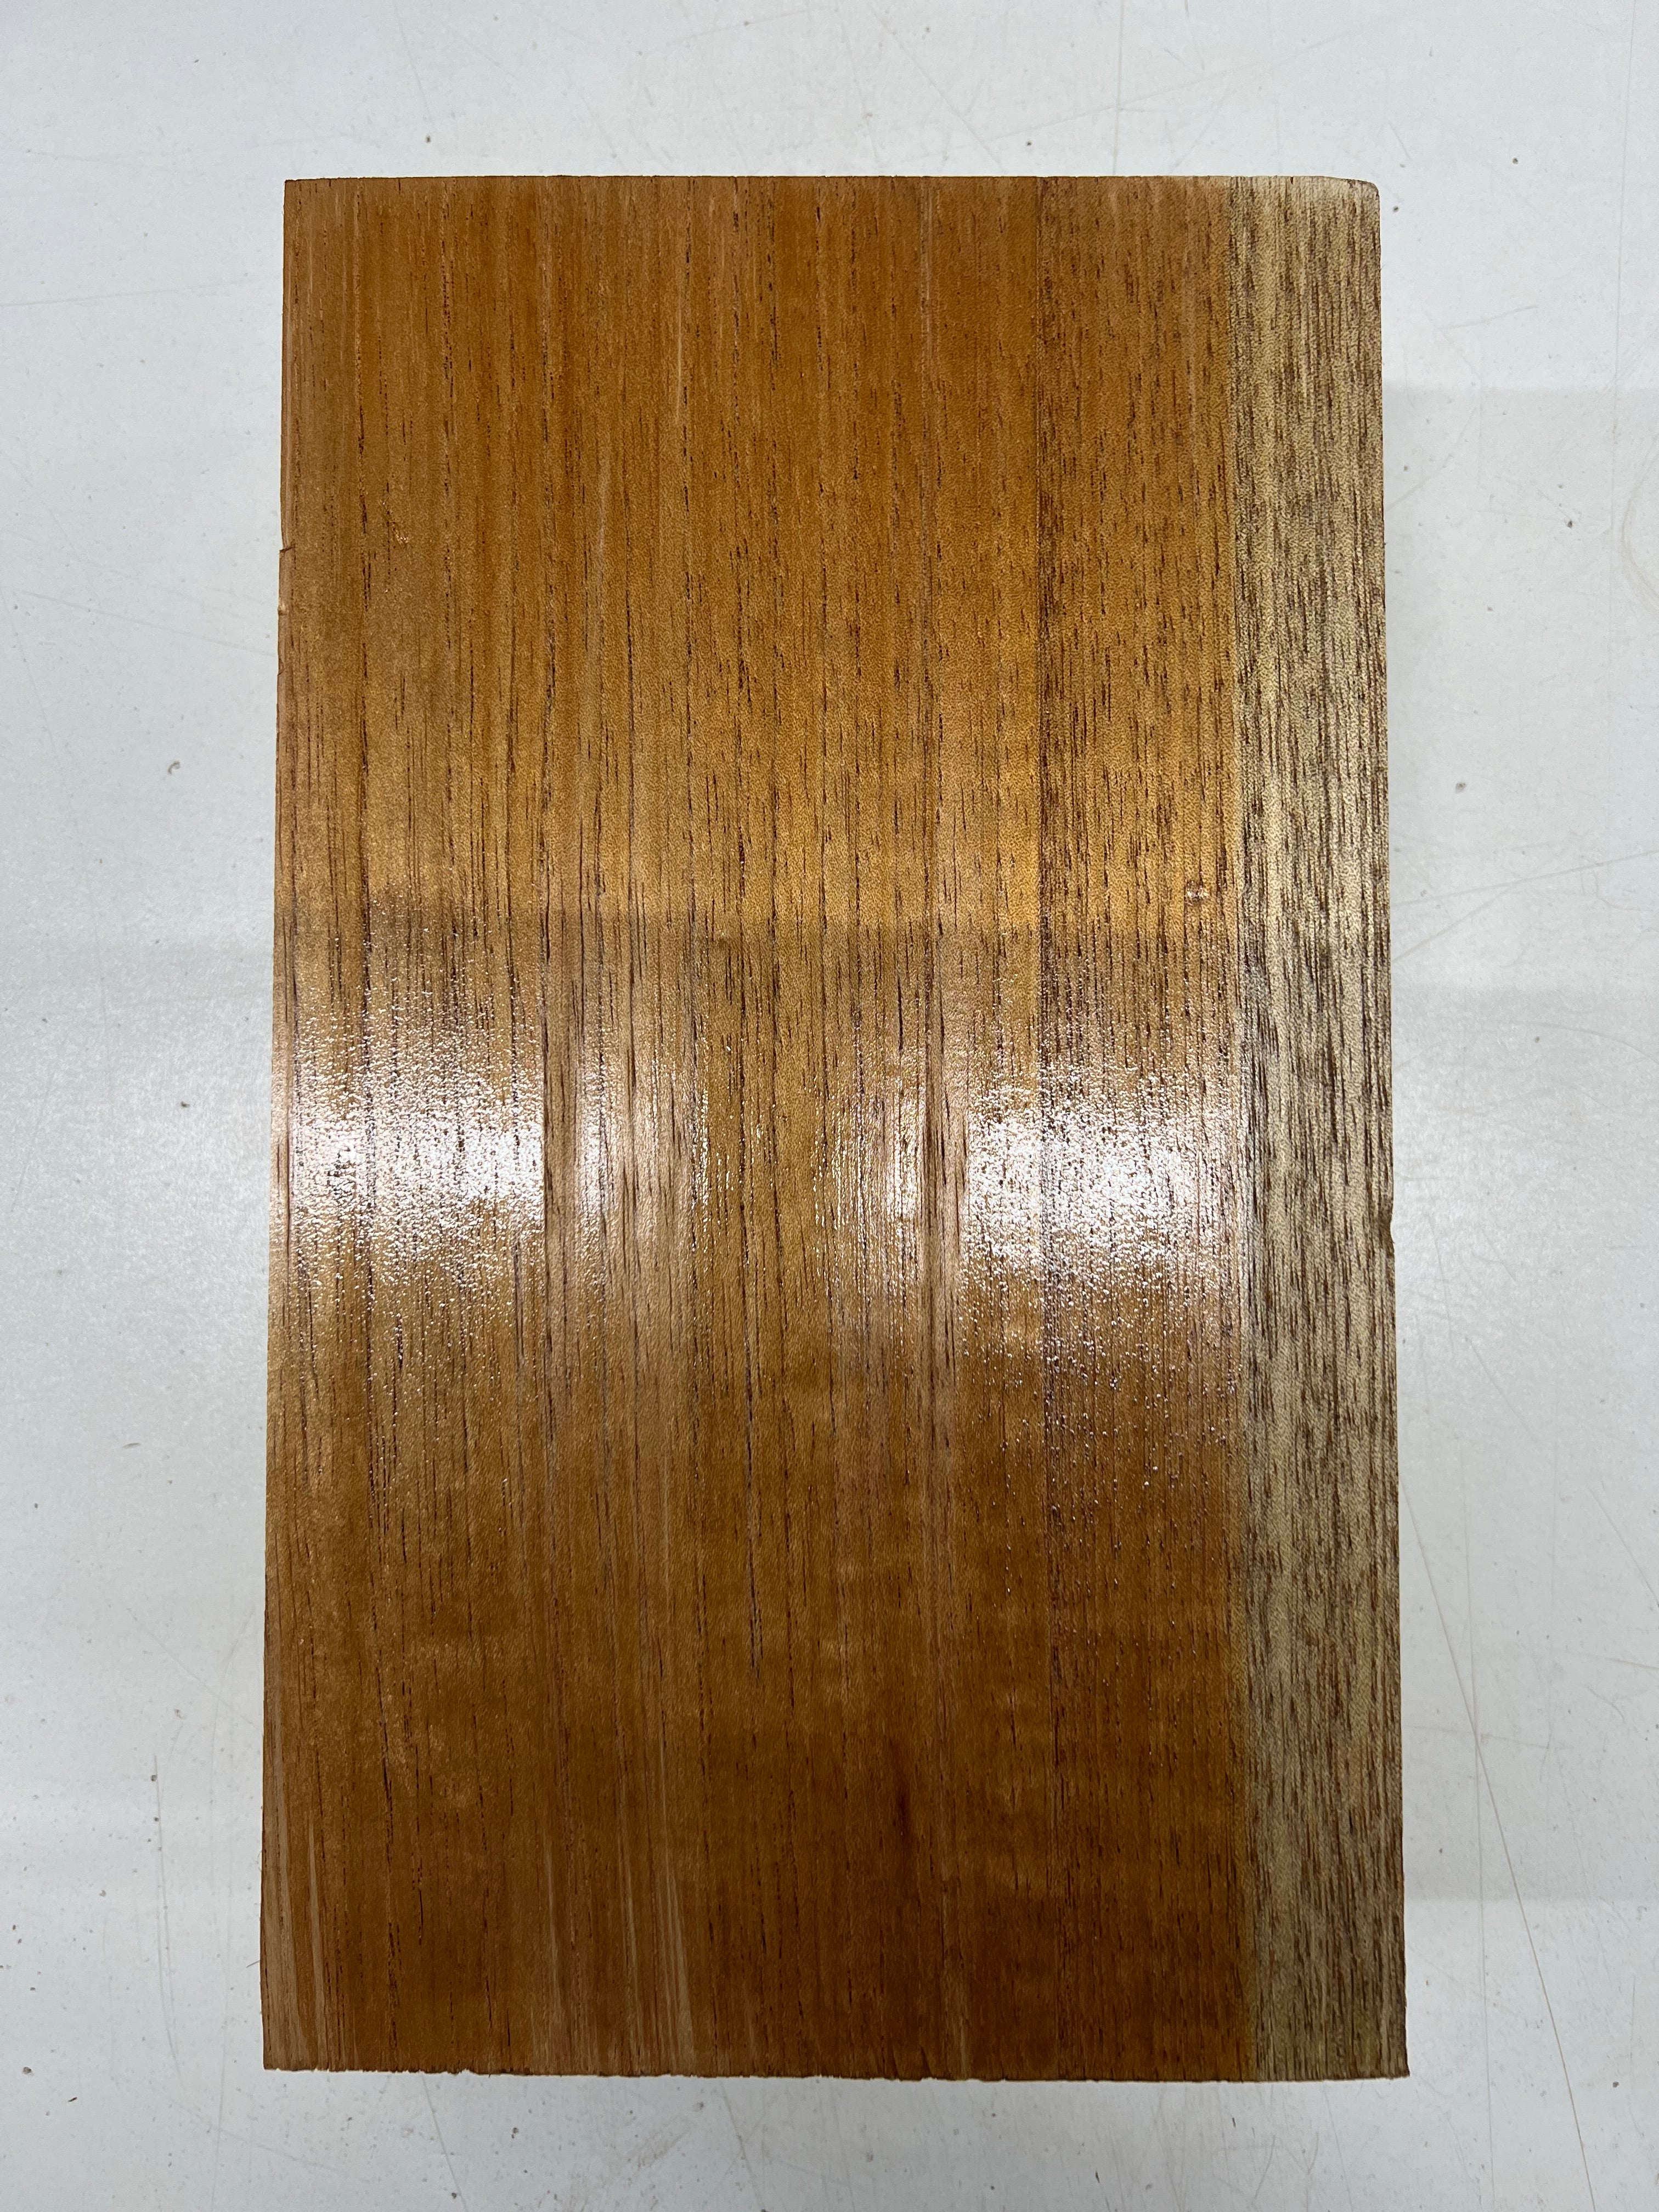 Spanish Cedar Lumber Board Wood Blank 11-1/2&quot;x 6-3/4&quot;x 3&quot; 